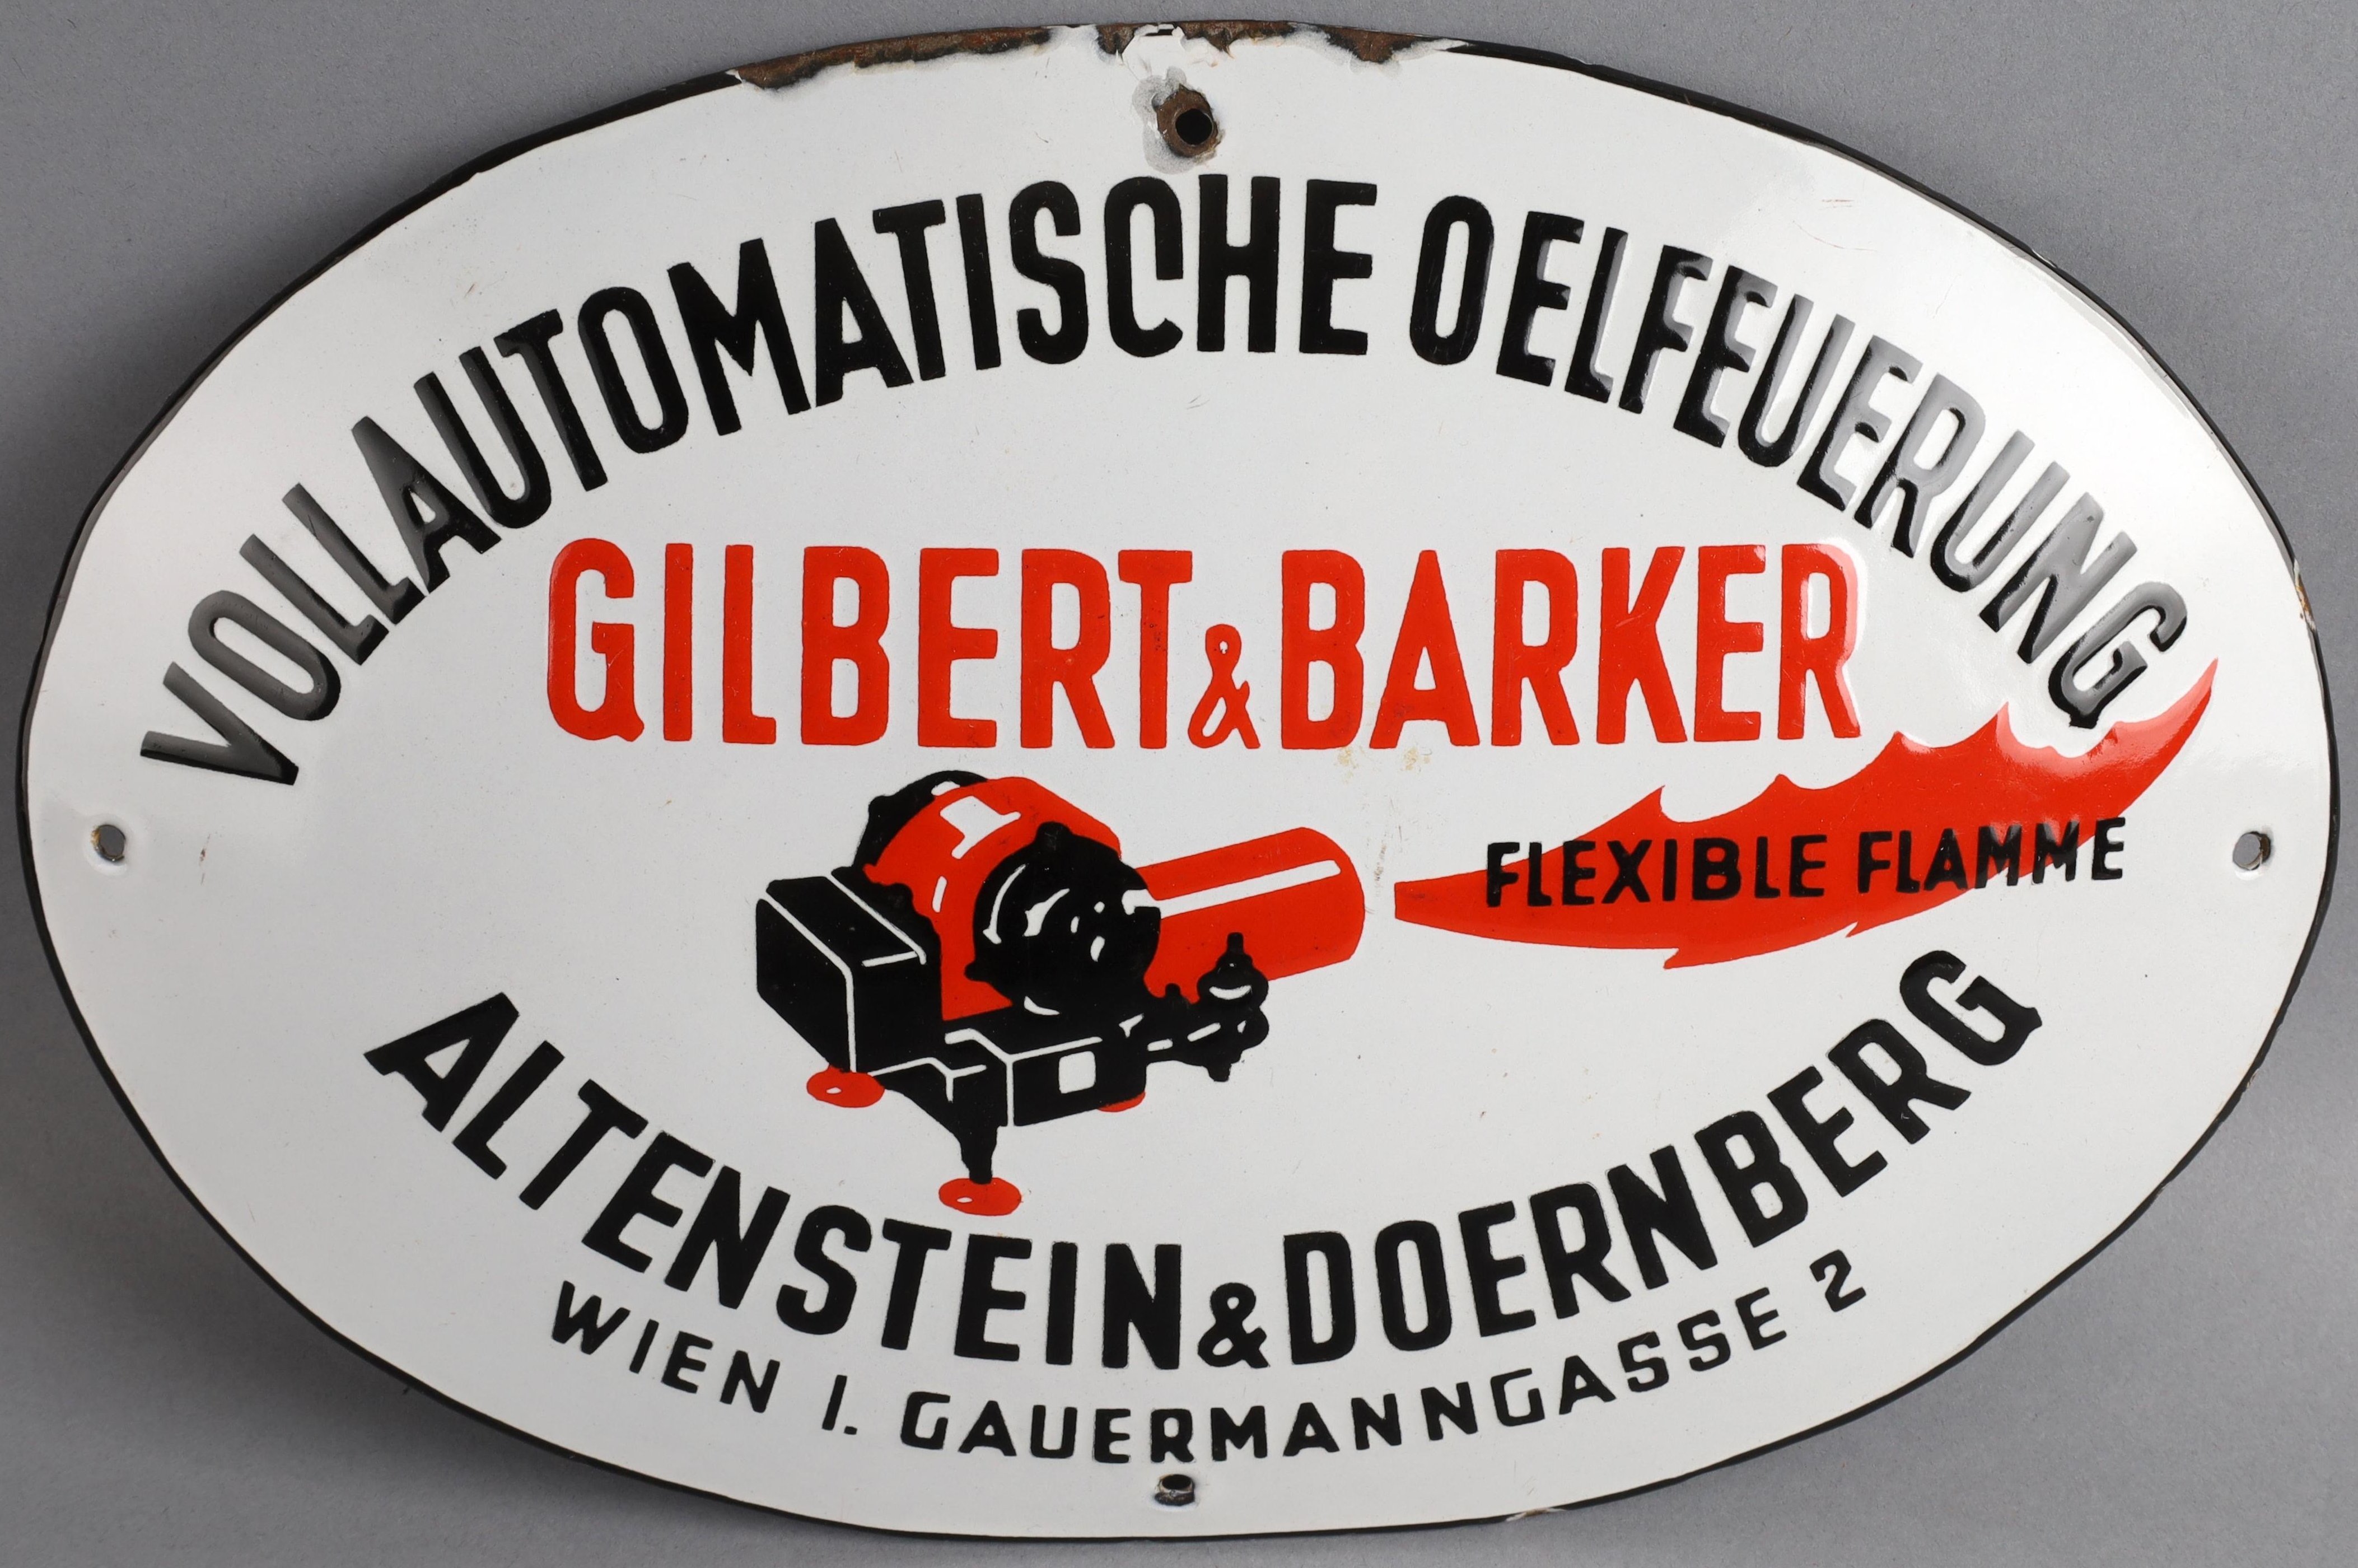 Gilbert & Barker